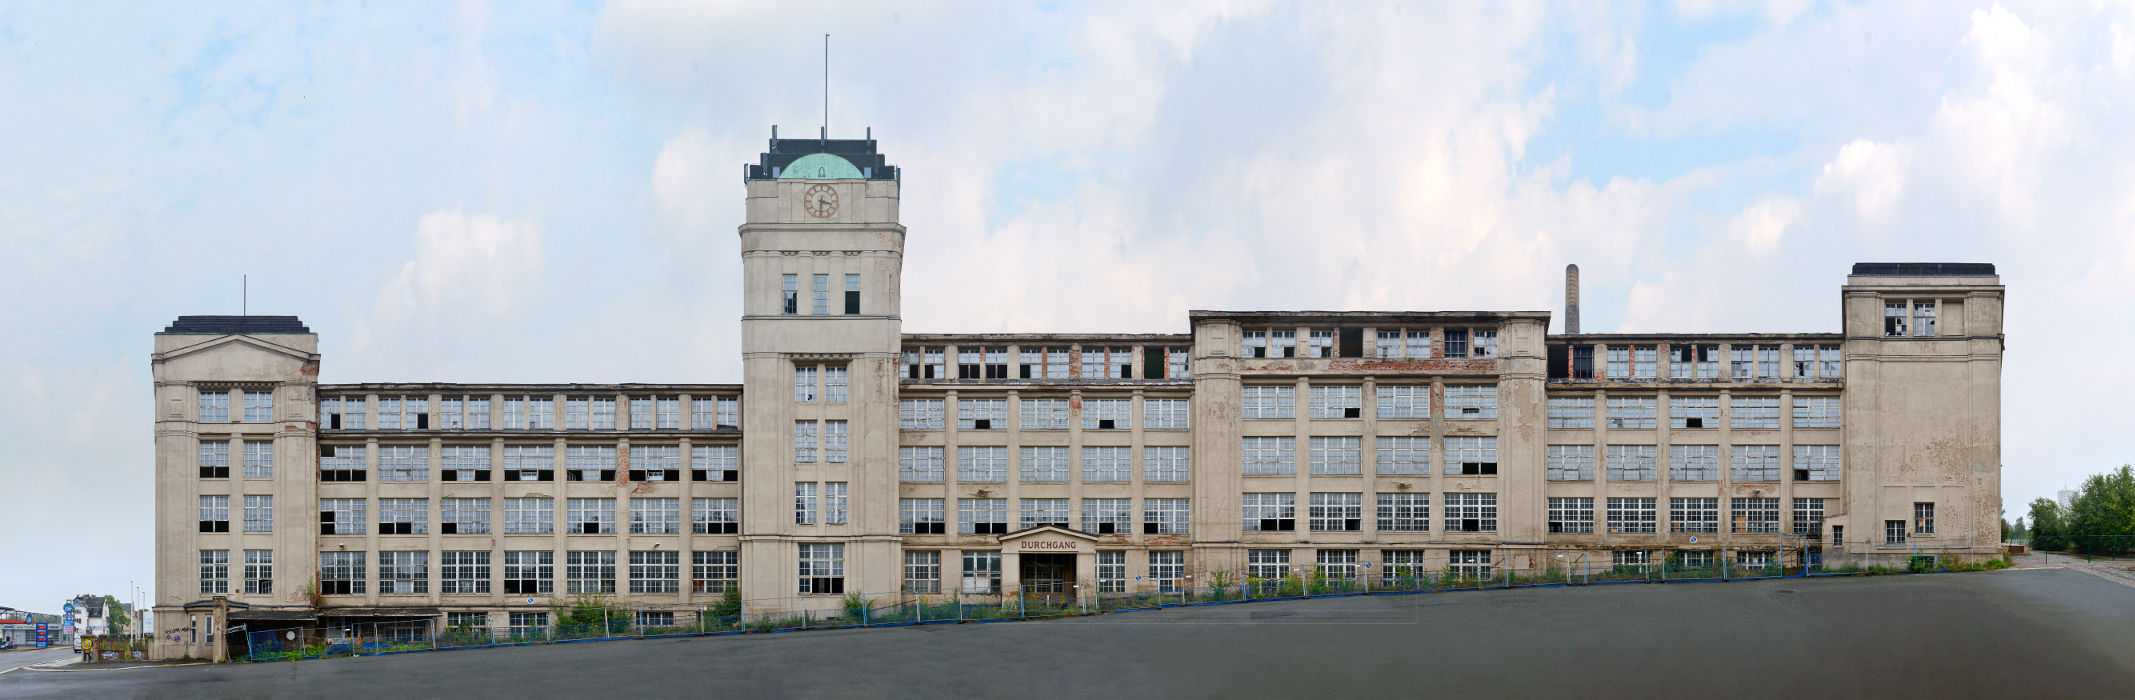 Chemnitz Industry Architecture Wanderer Werke Saxony